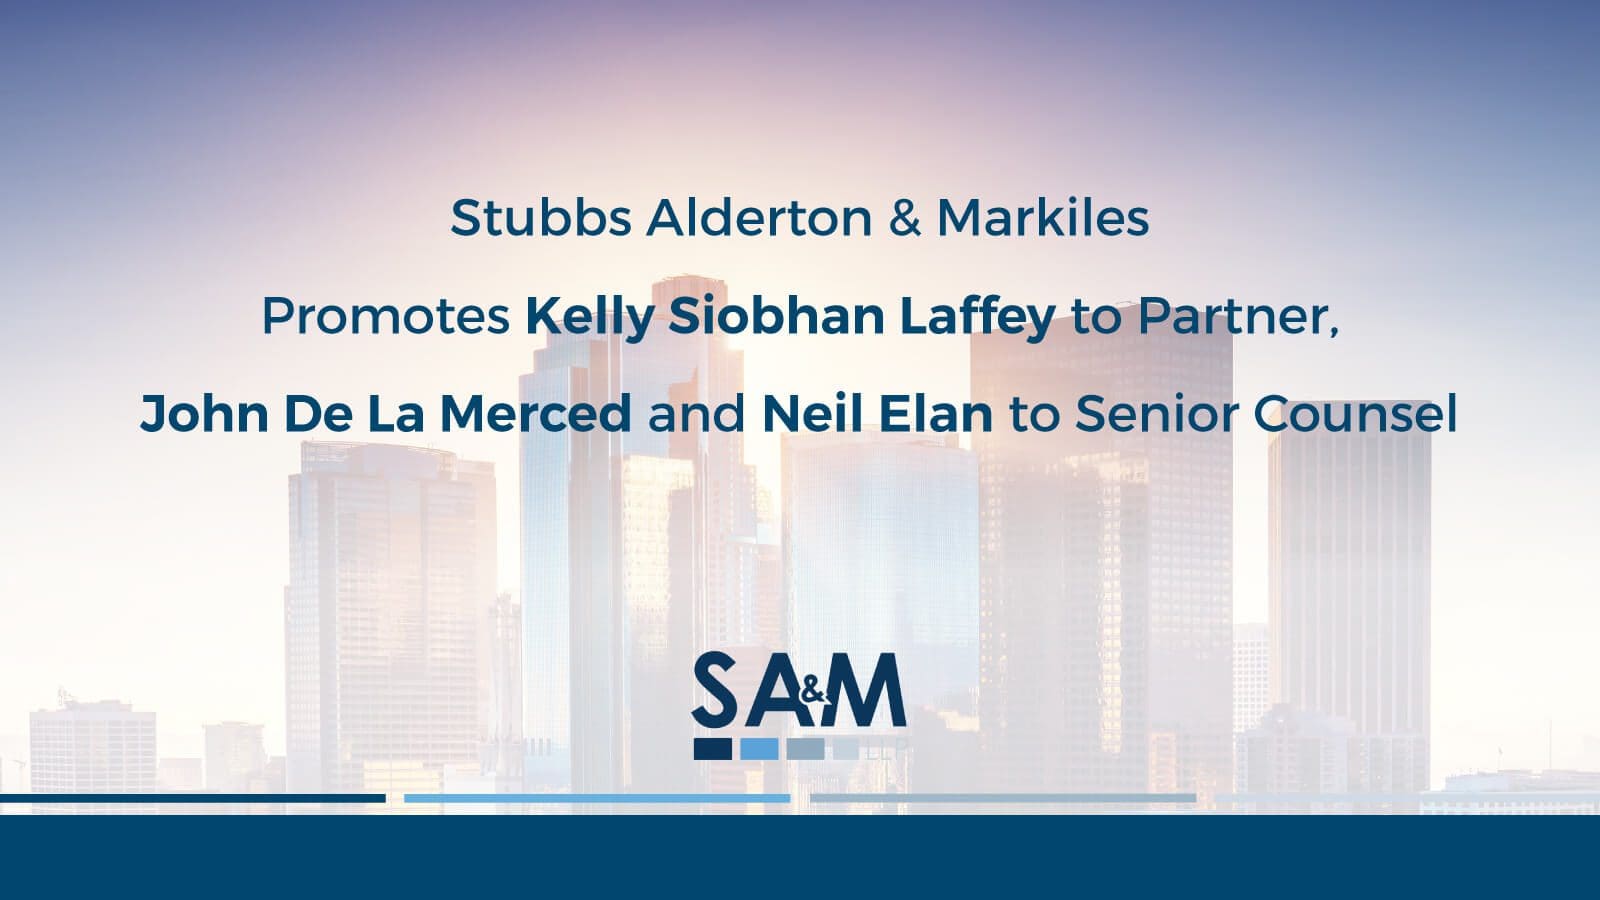 Stubbs Alderton & Markiles Promotes Kelly Siobhan Laffey to Partner, John De La Merced and Neil Elan to Senior Counsel